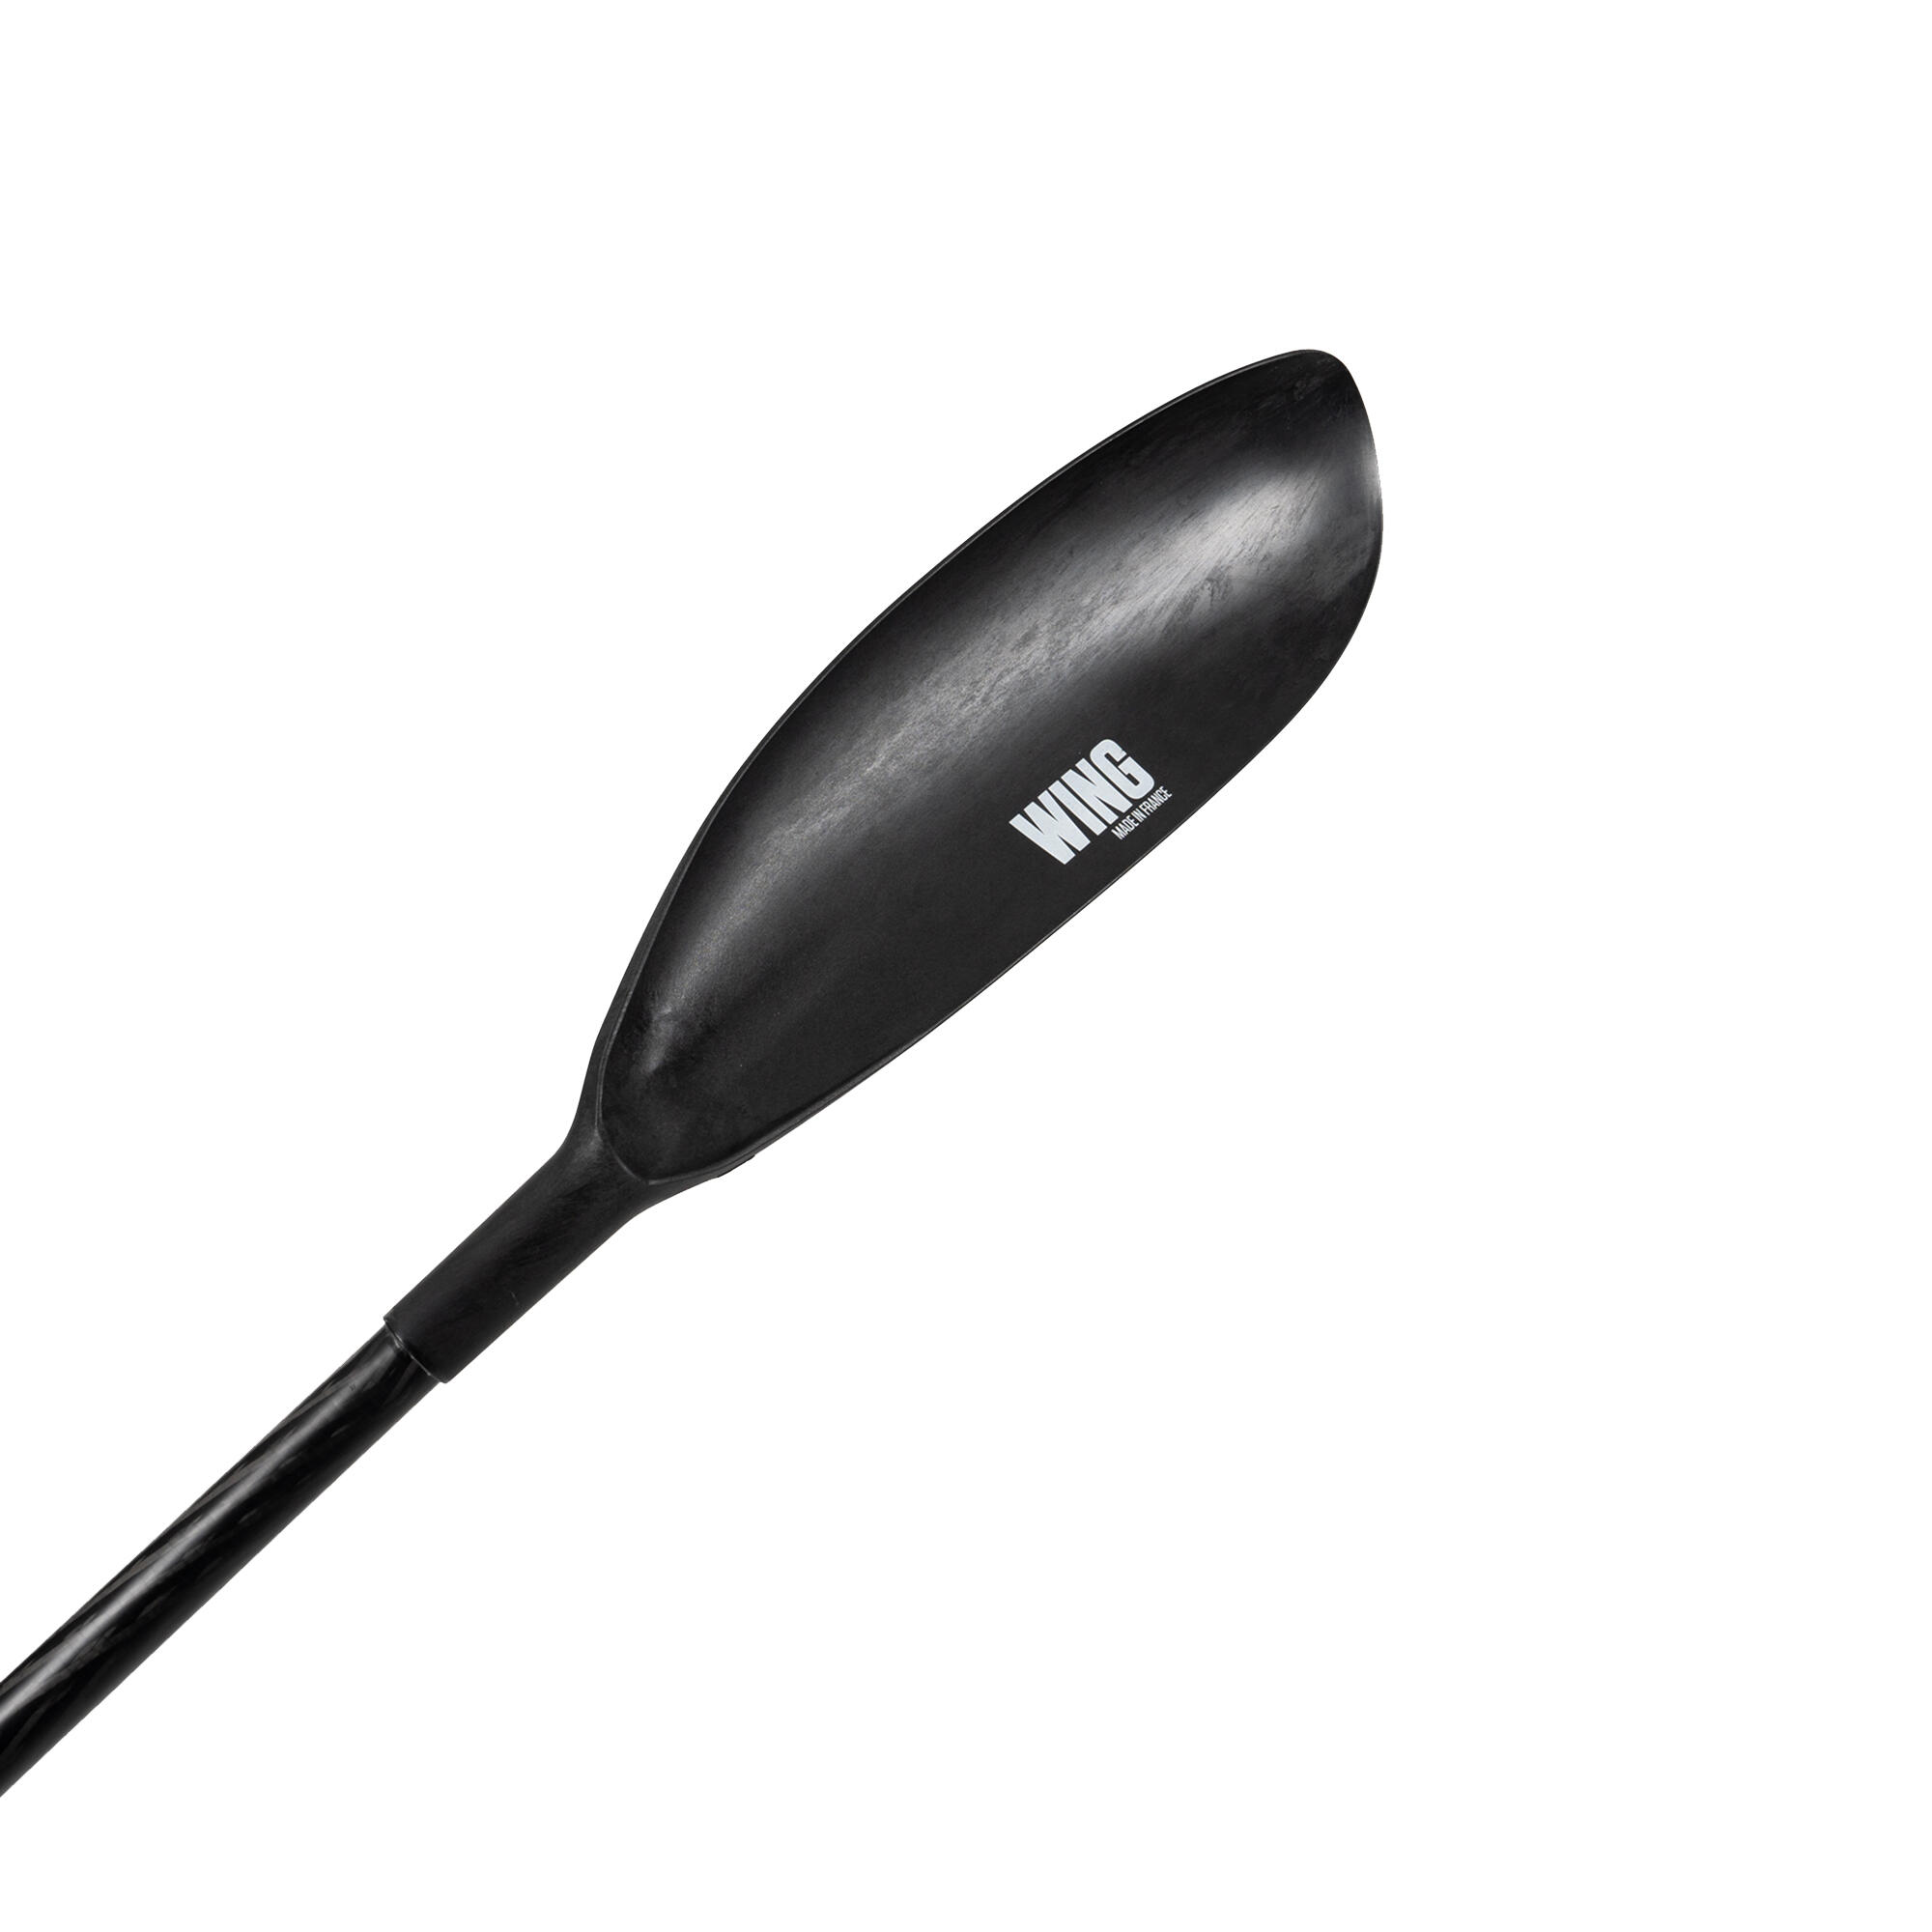 Kayak spoon paddle - carbon and fibreglass - adjustable / 2 sections - Rotomod 3/13